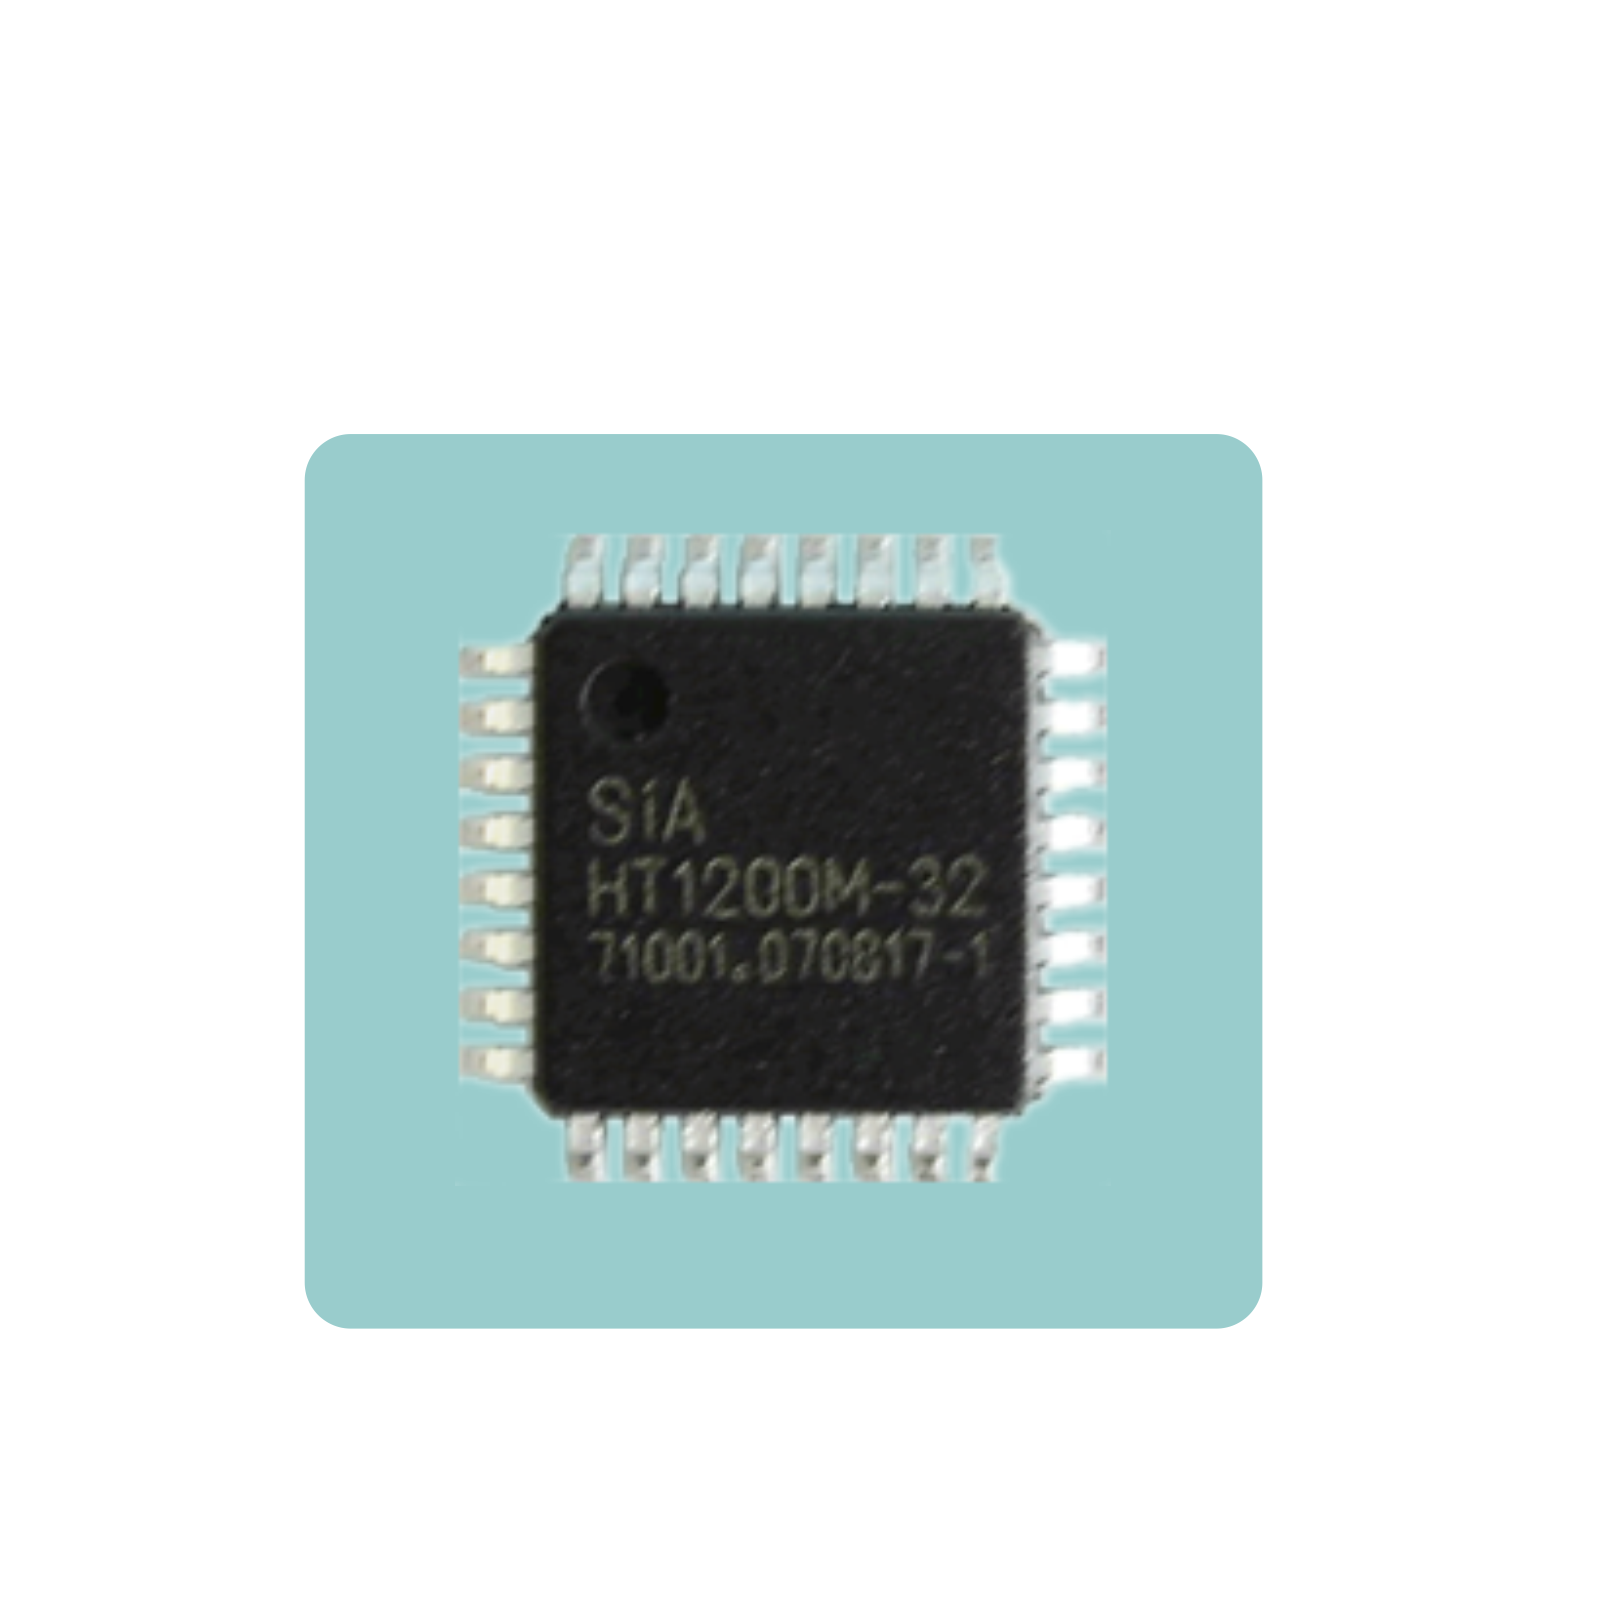 HART Communication Chip Controller 2